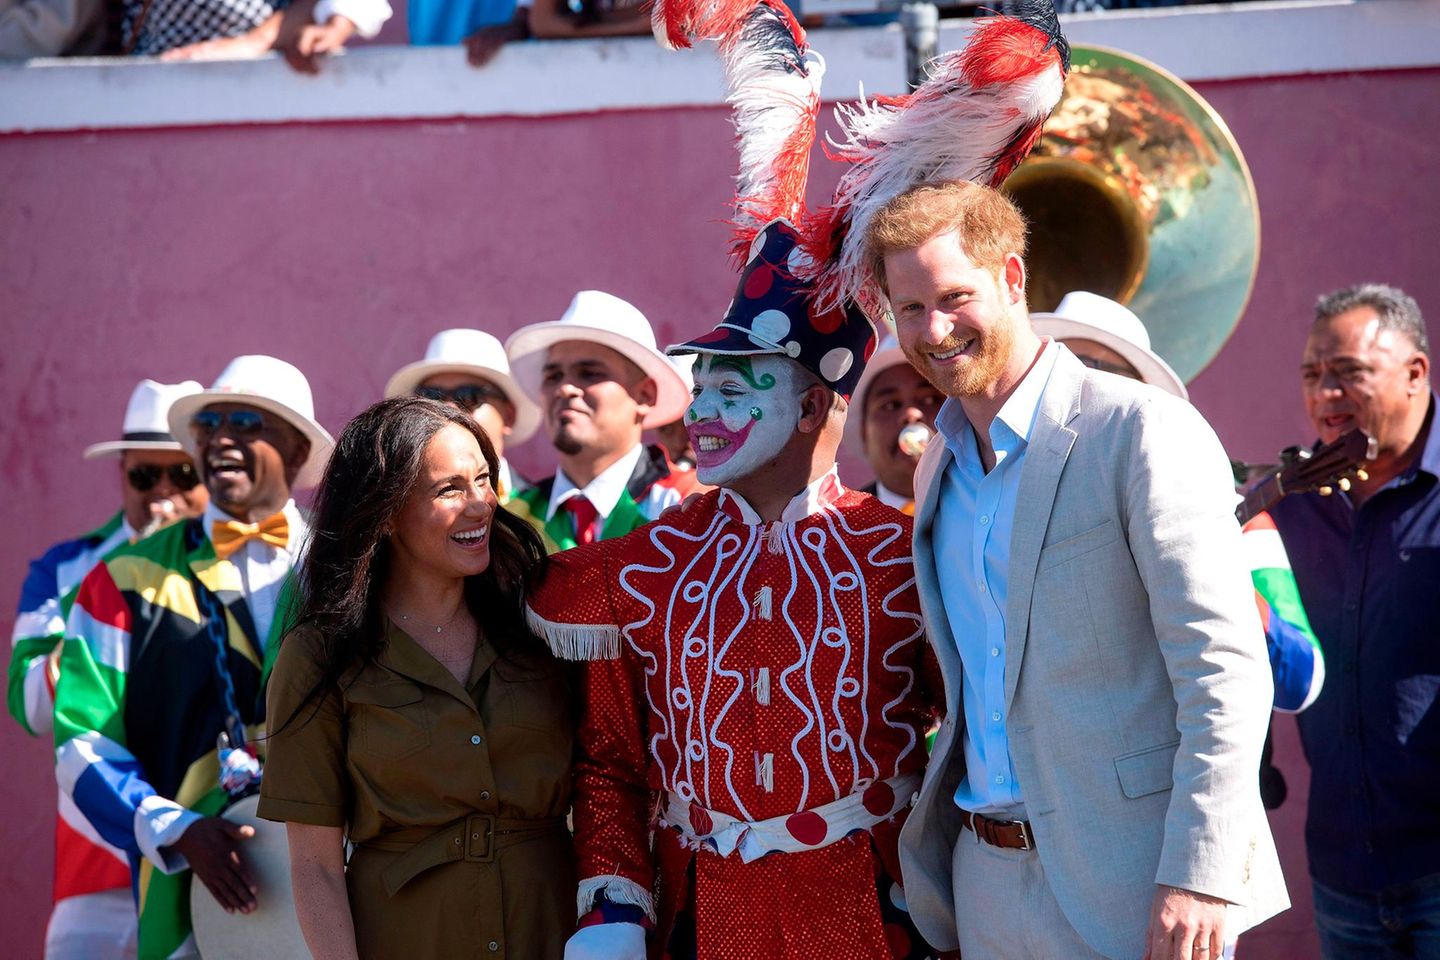 Herzogin Meghan + Prinz Harry in Afrika: Meghan Markle und Prinz Harry posieren mit Clown